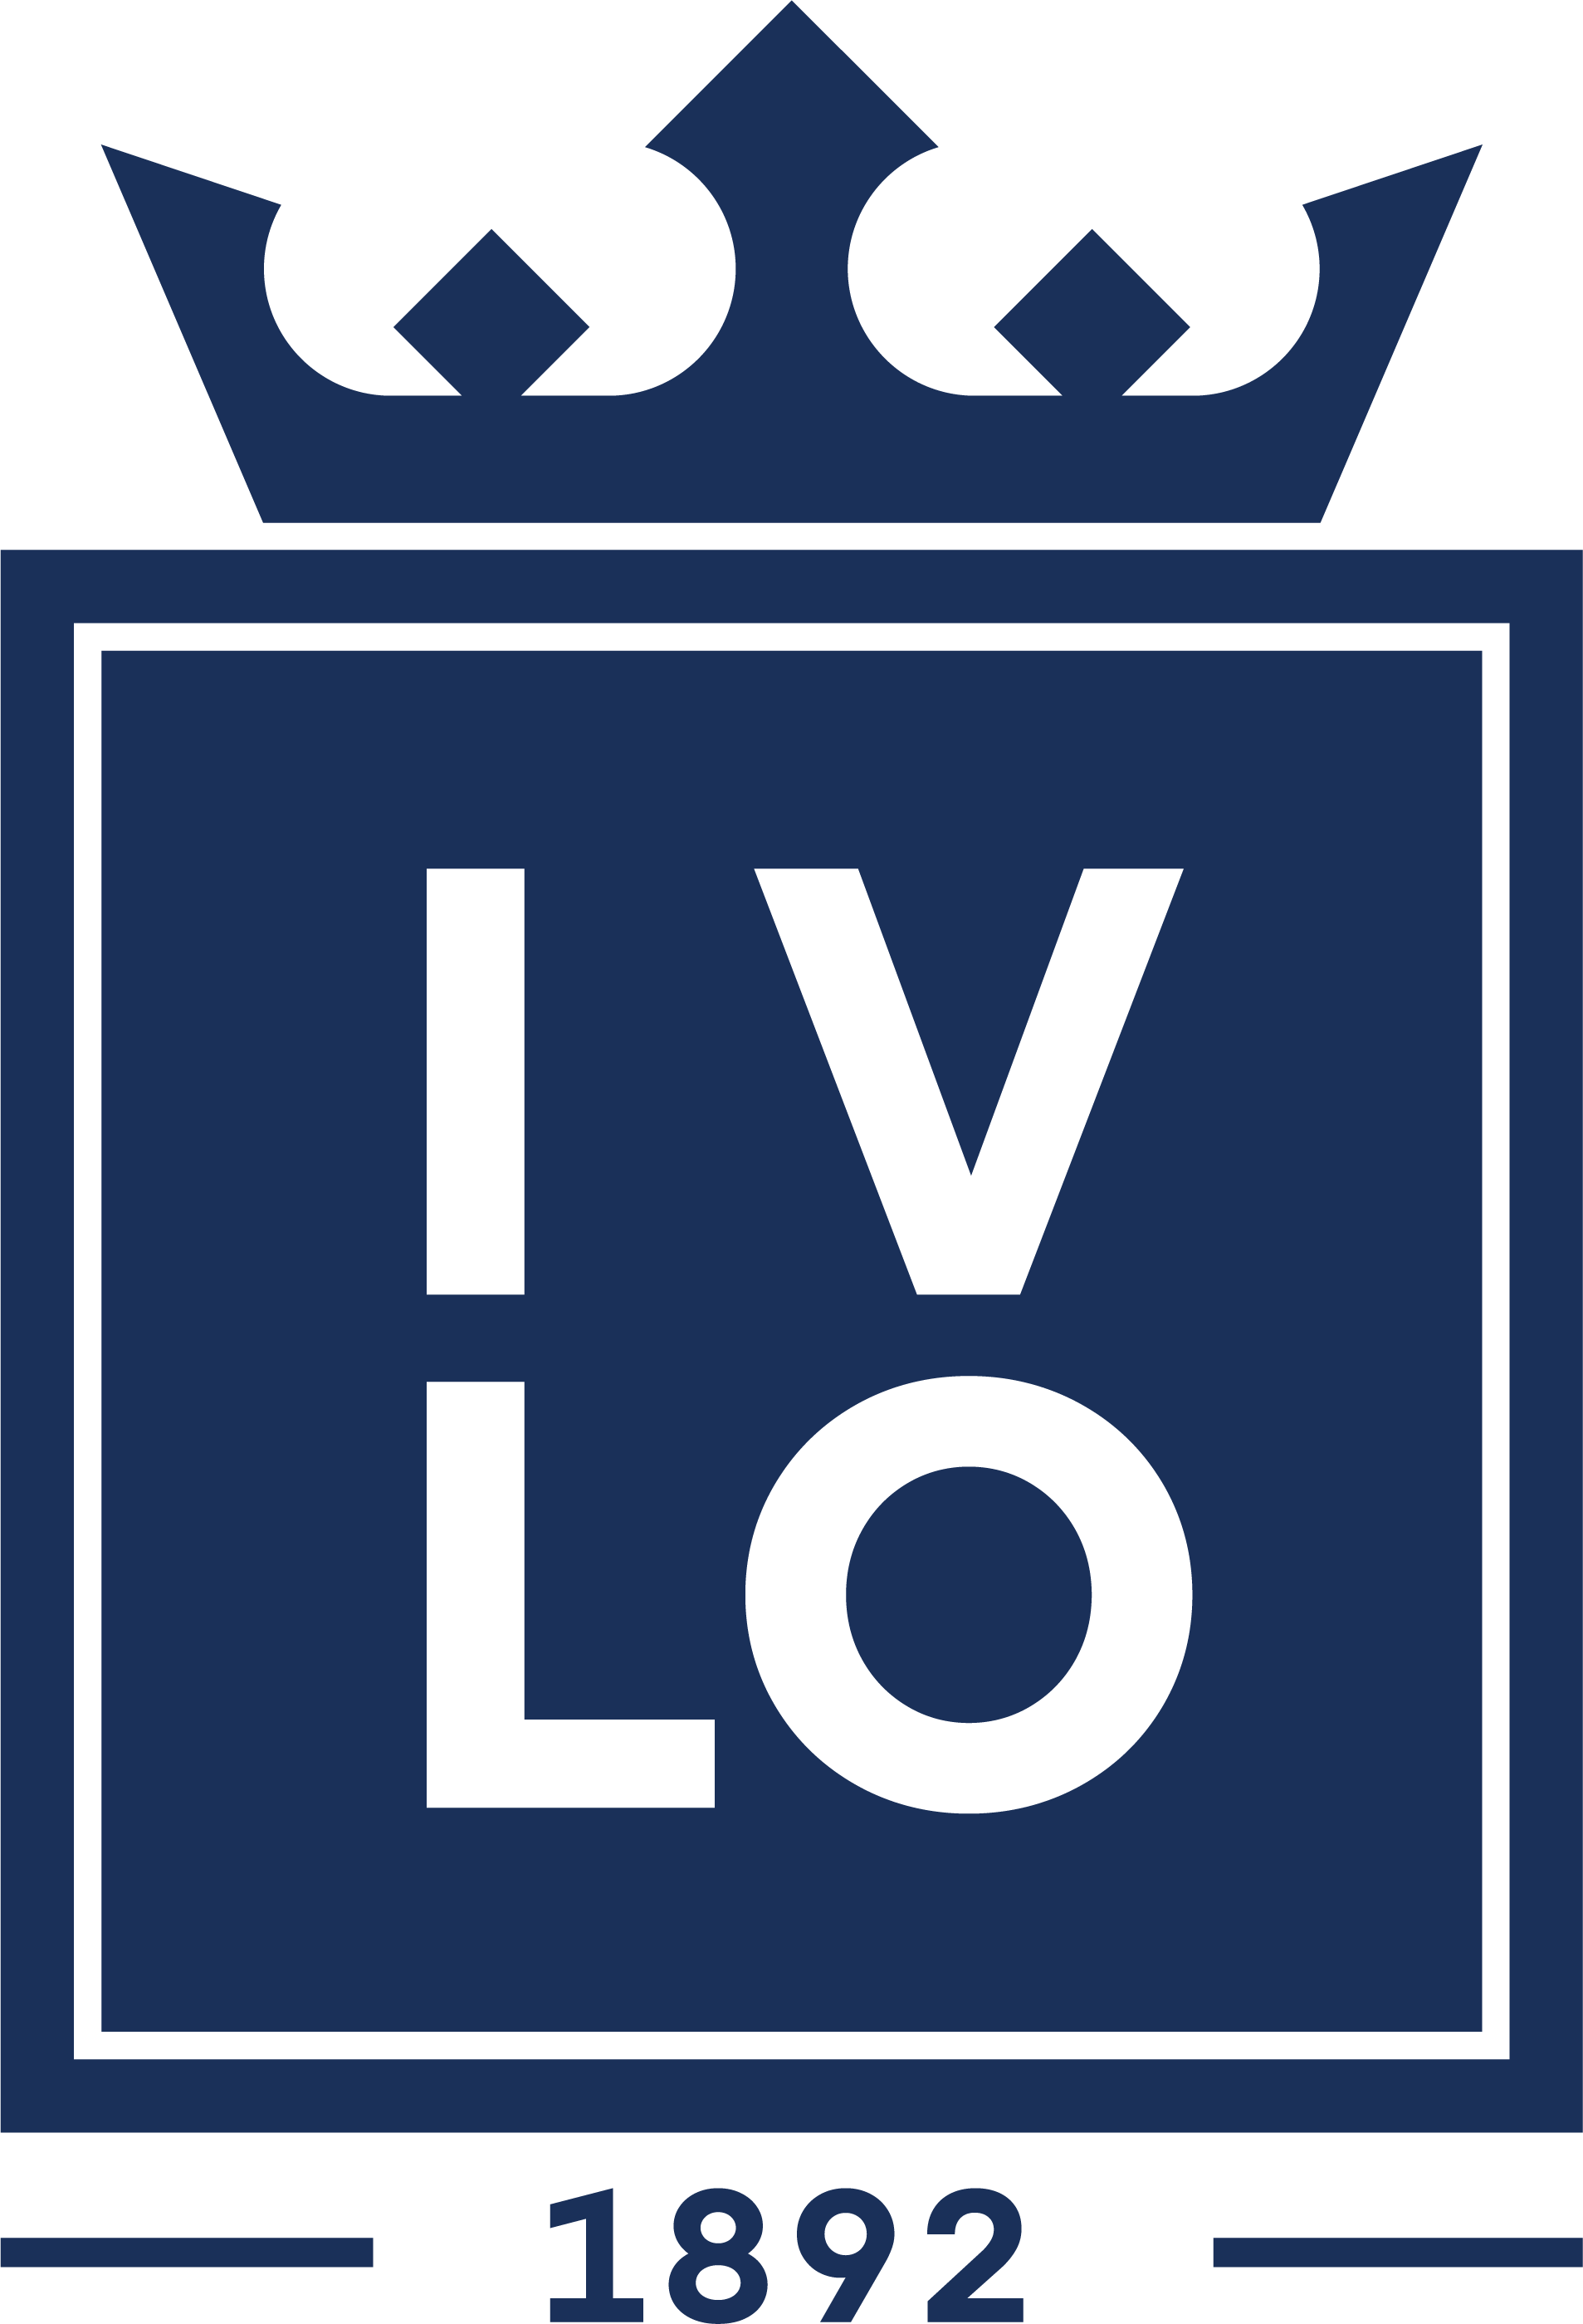 IV LO, logo